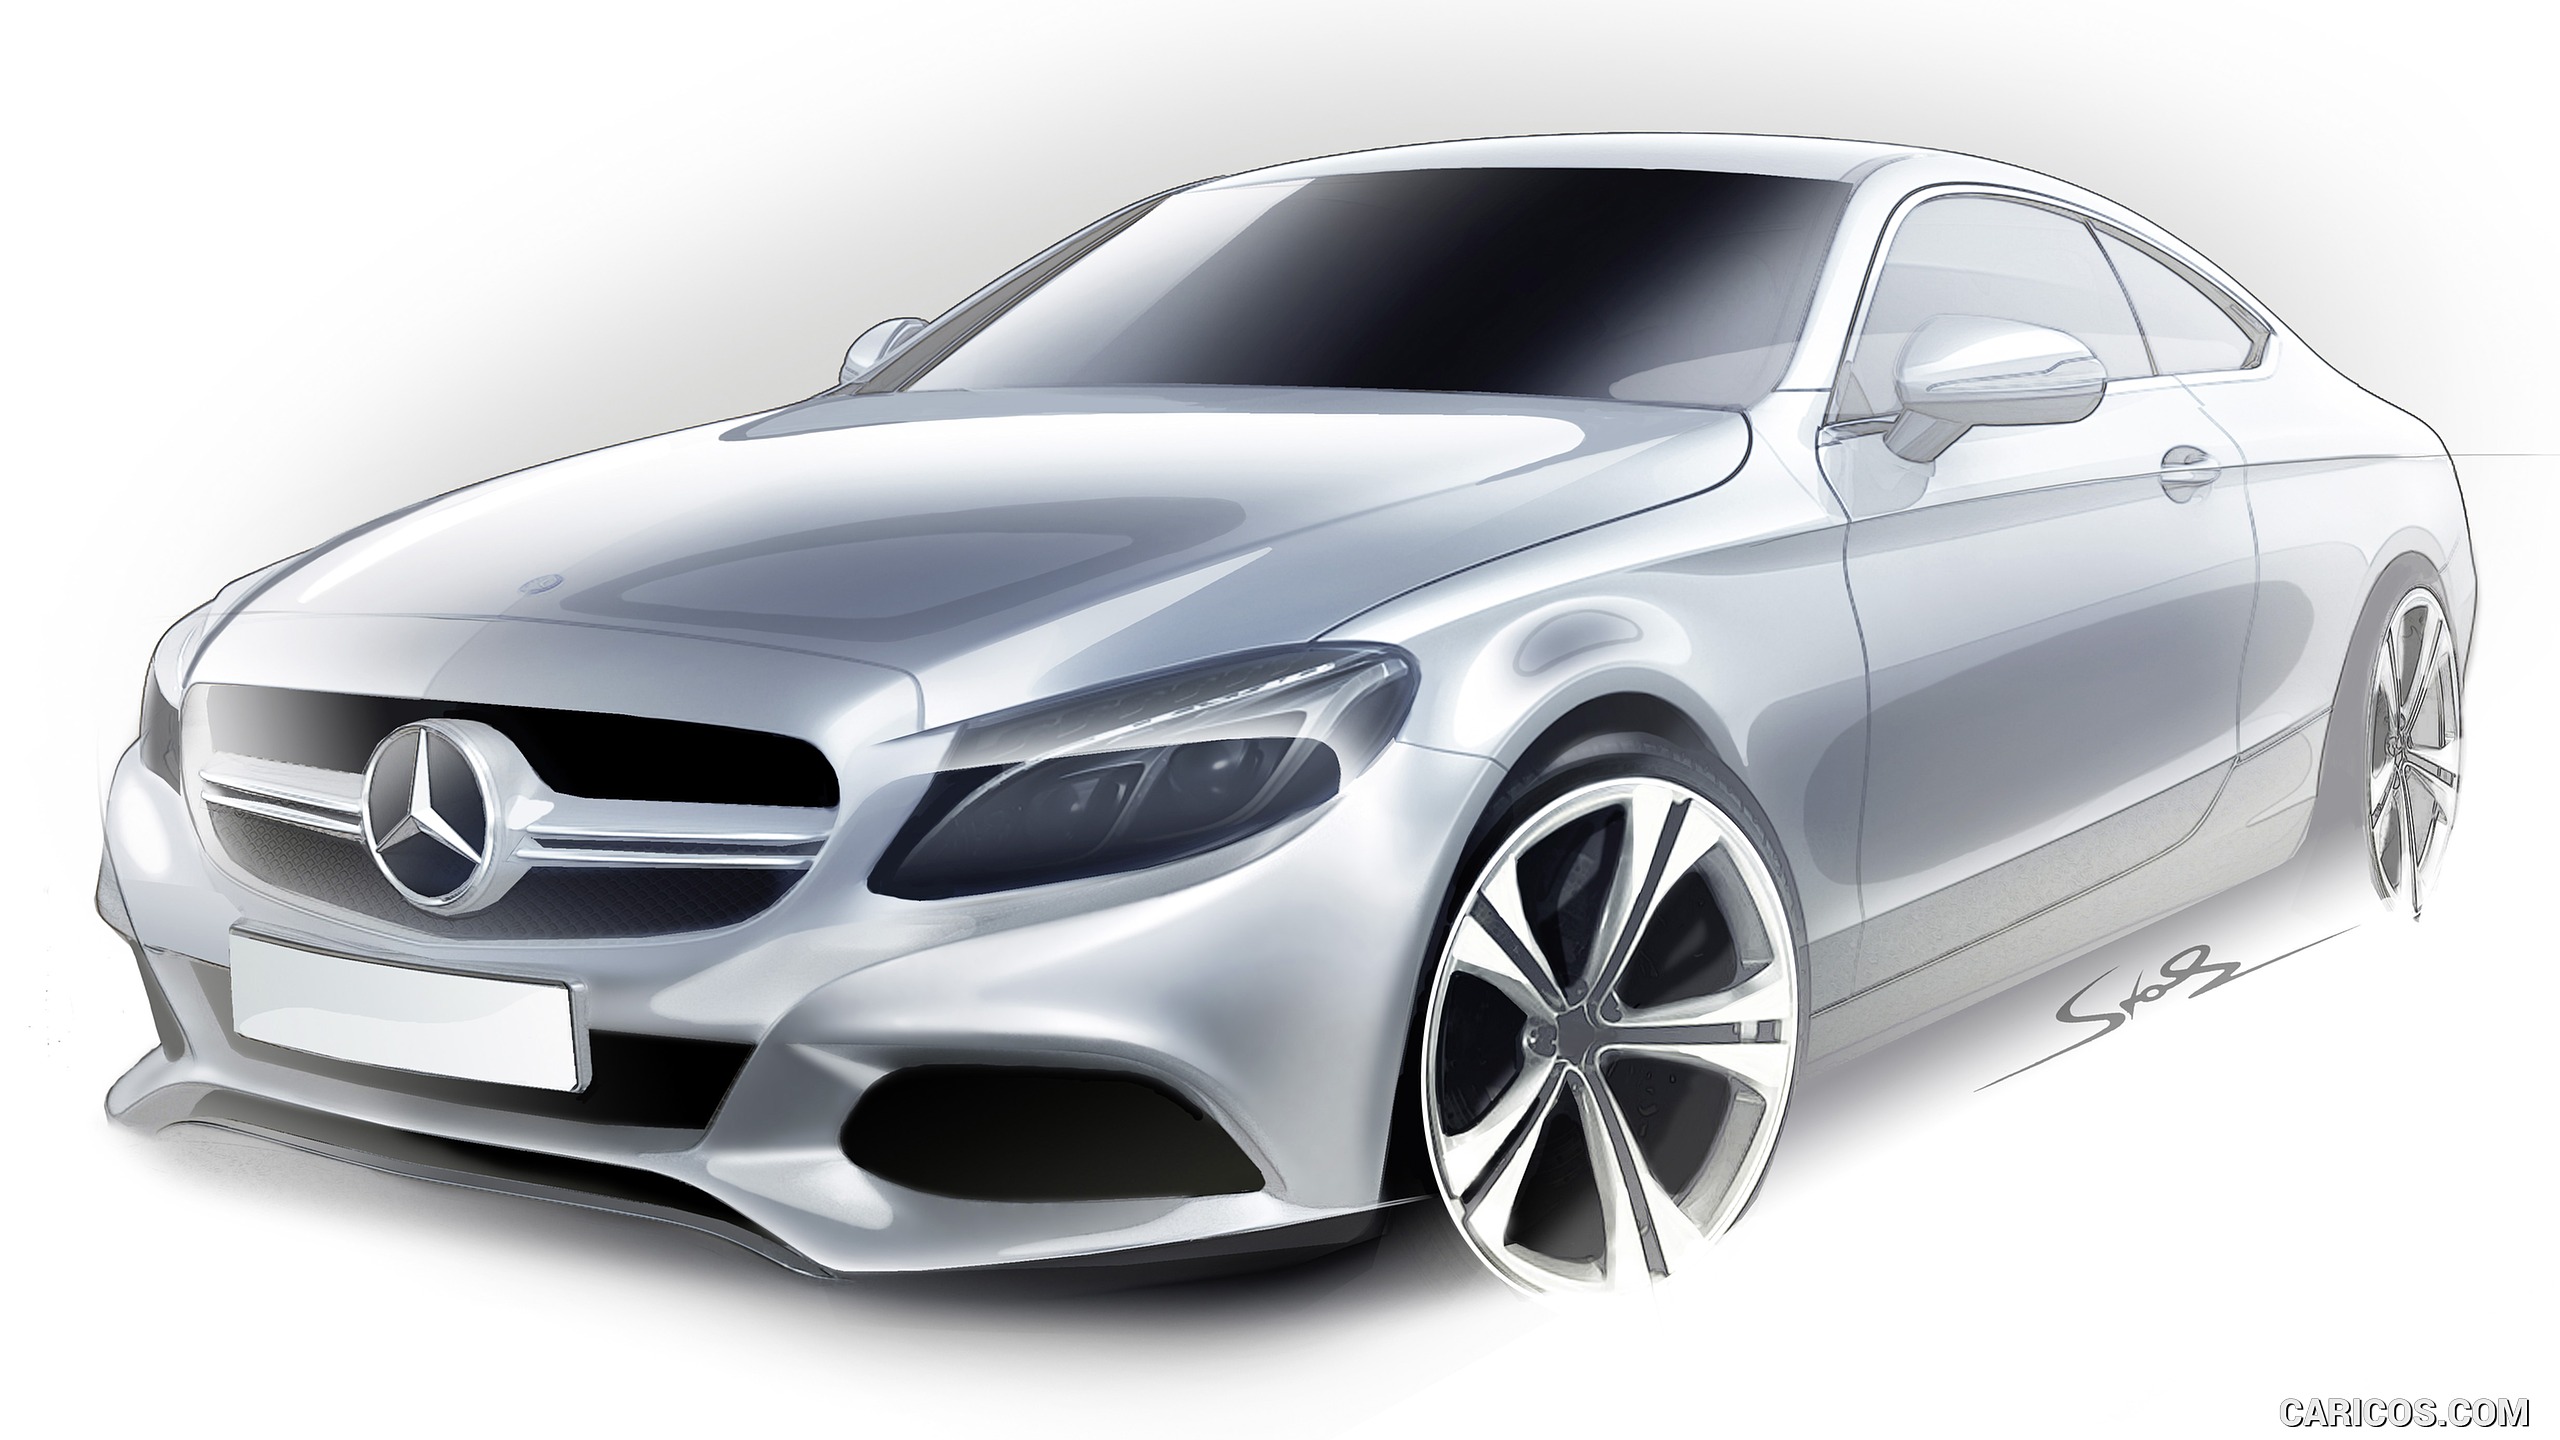 2017 Mercedes-Benz C-Class Coupe - Design Sketch, #82 of 210